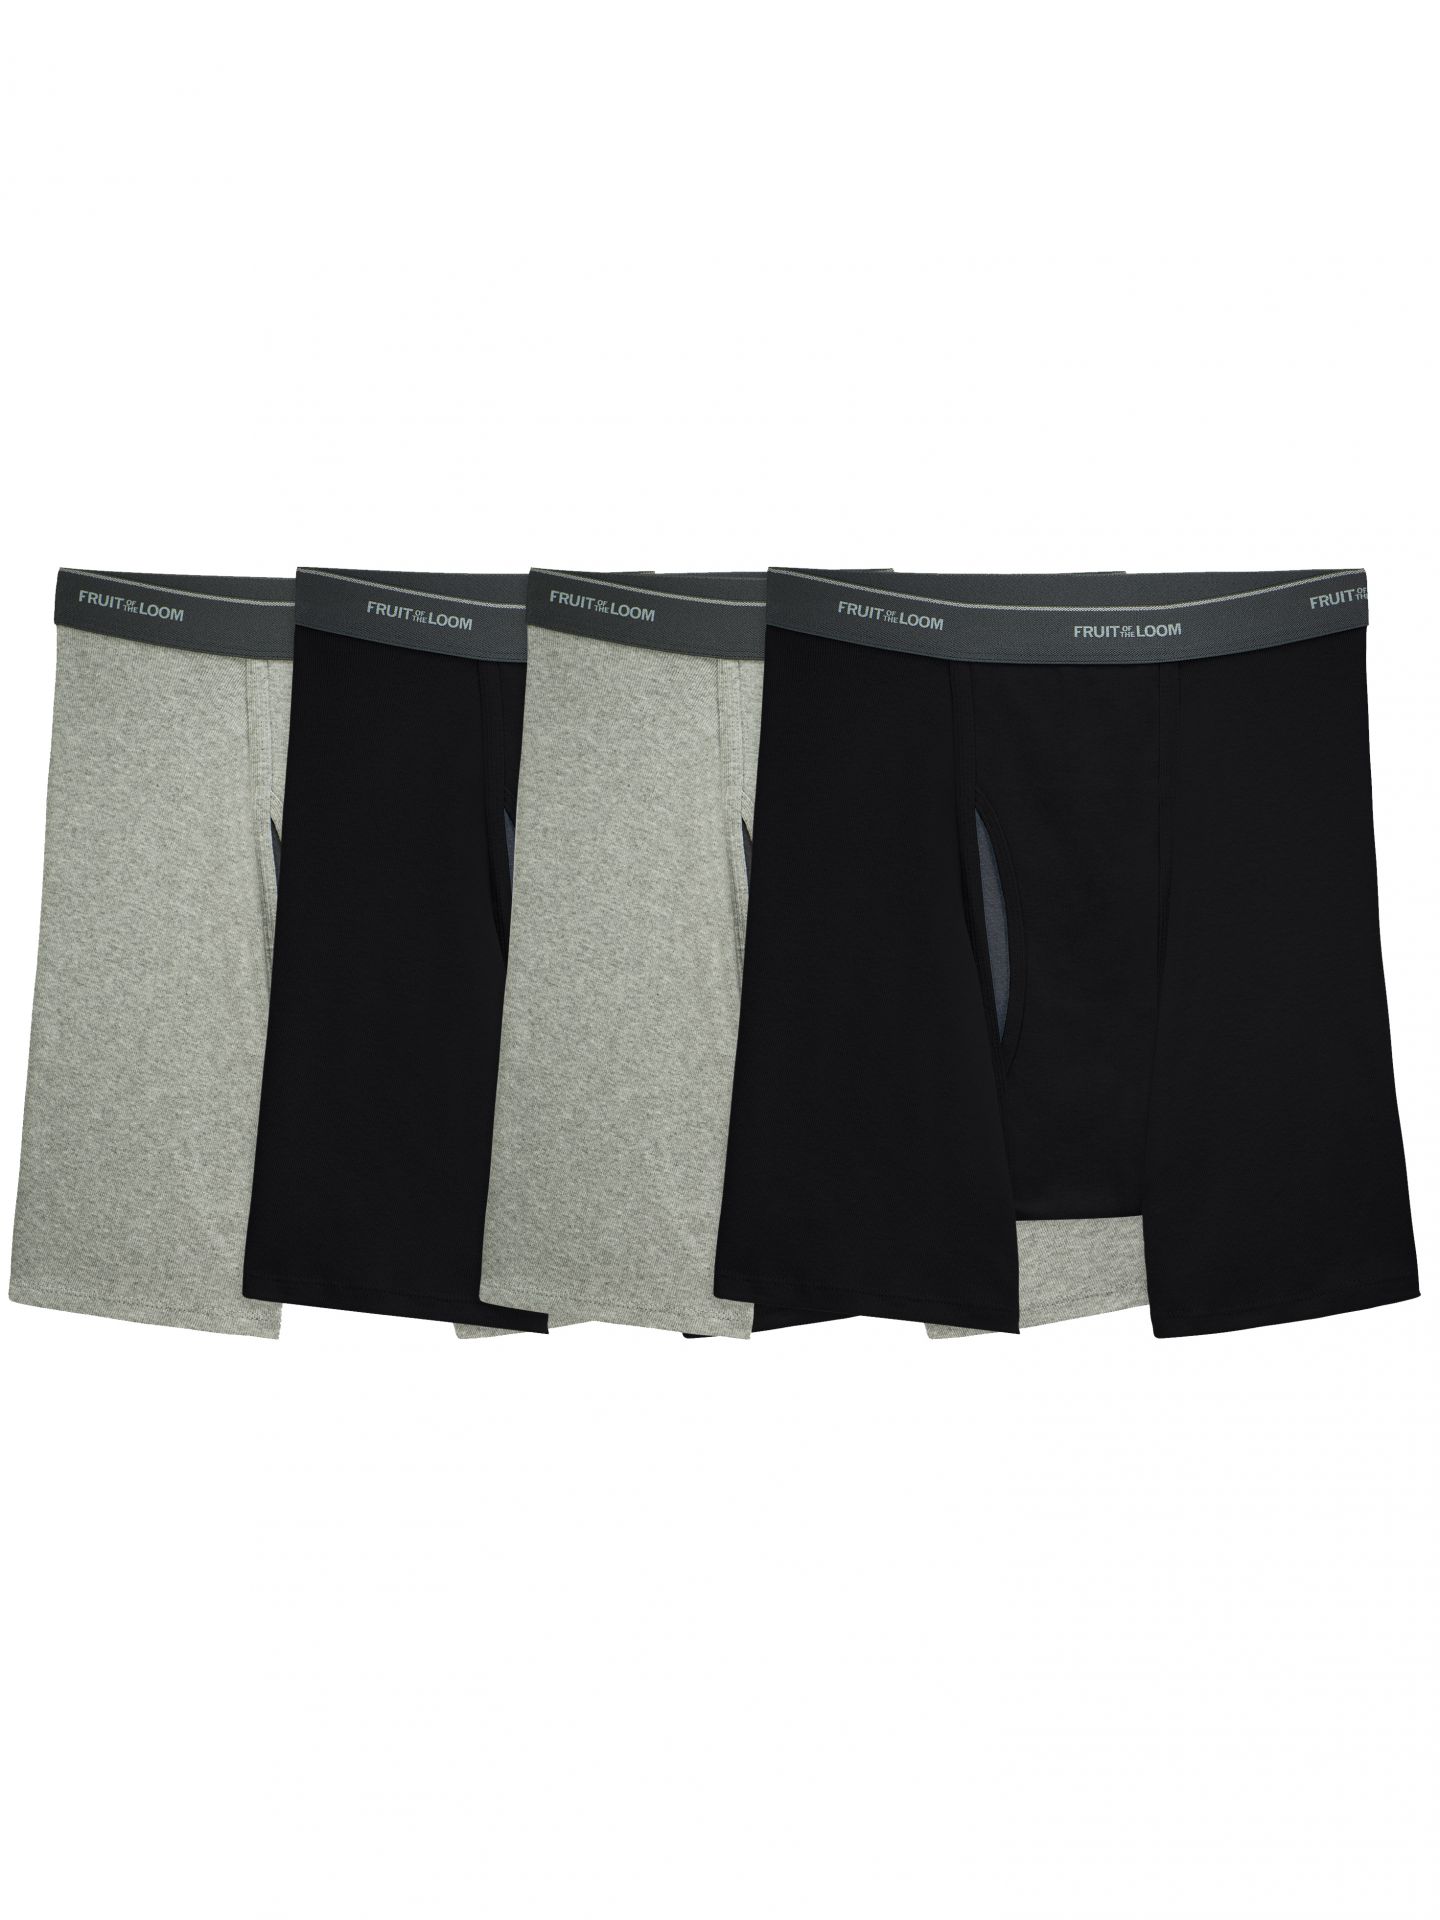 Hanes Men's Comfort Soft Waistband Boxer Briefs 4pk - Black/Gray XXL